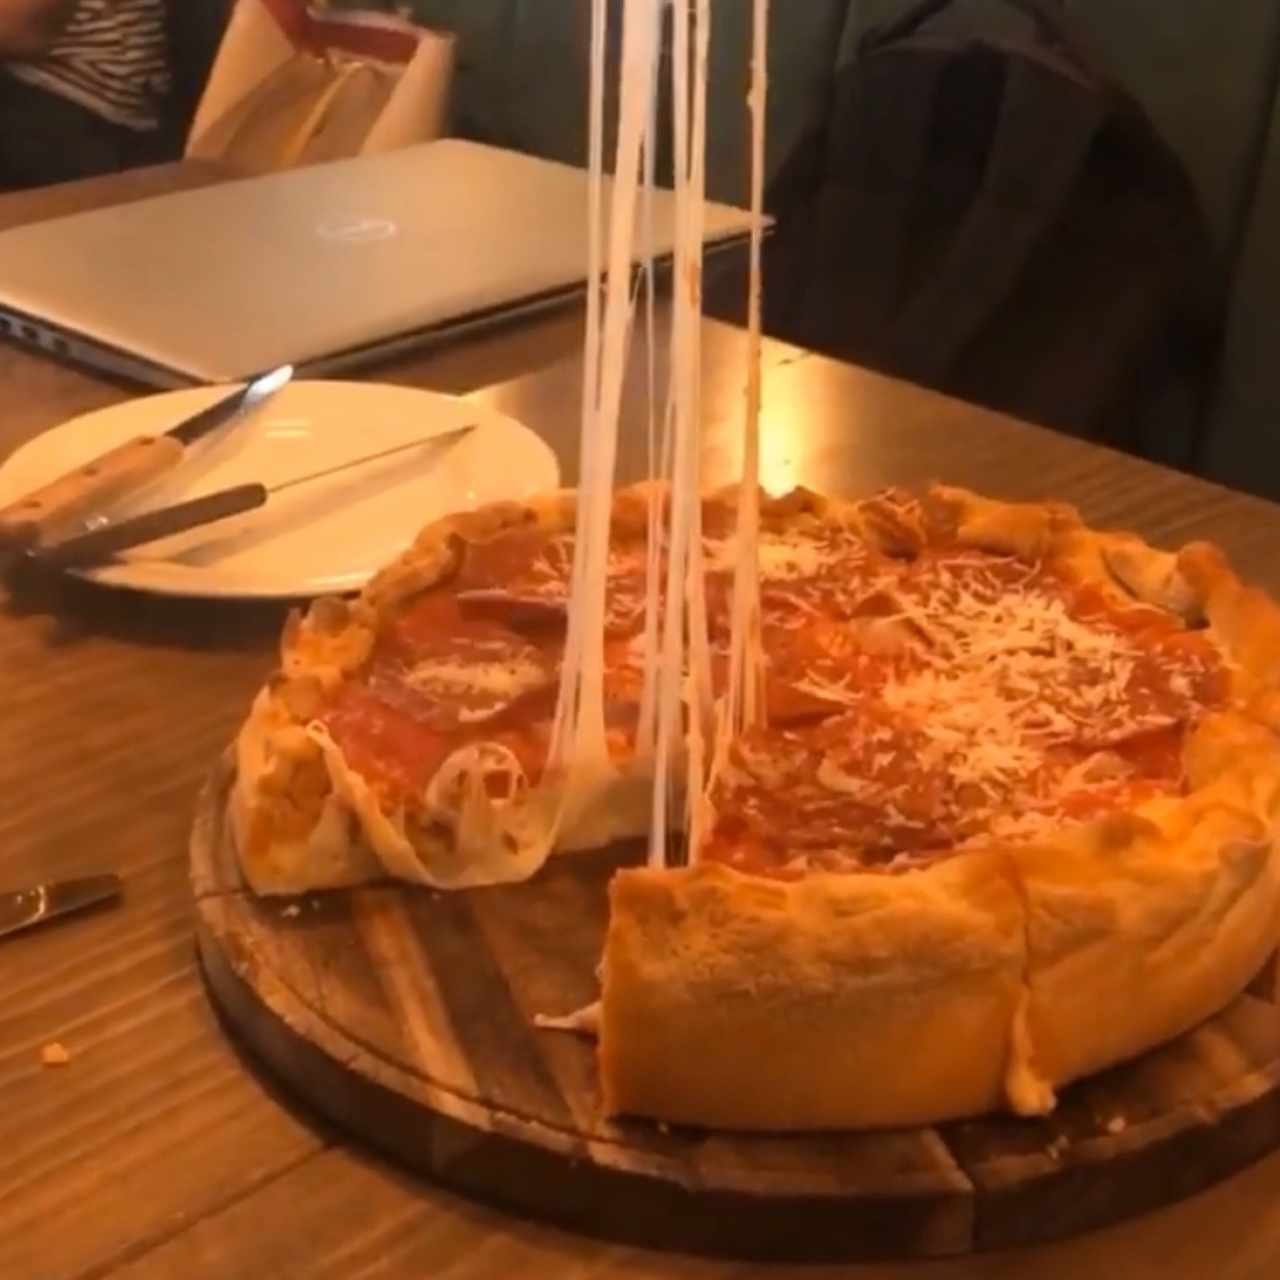 chicago pizza